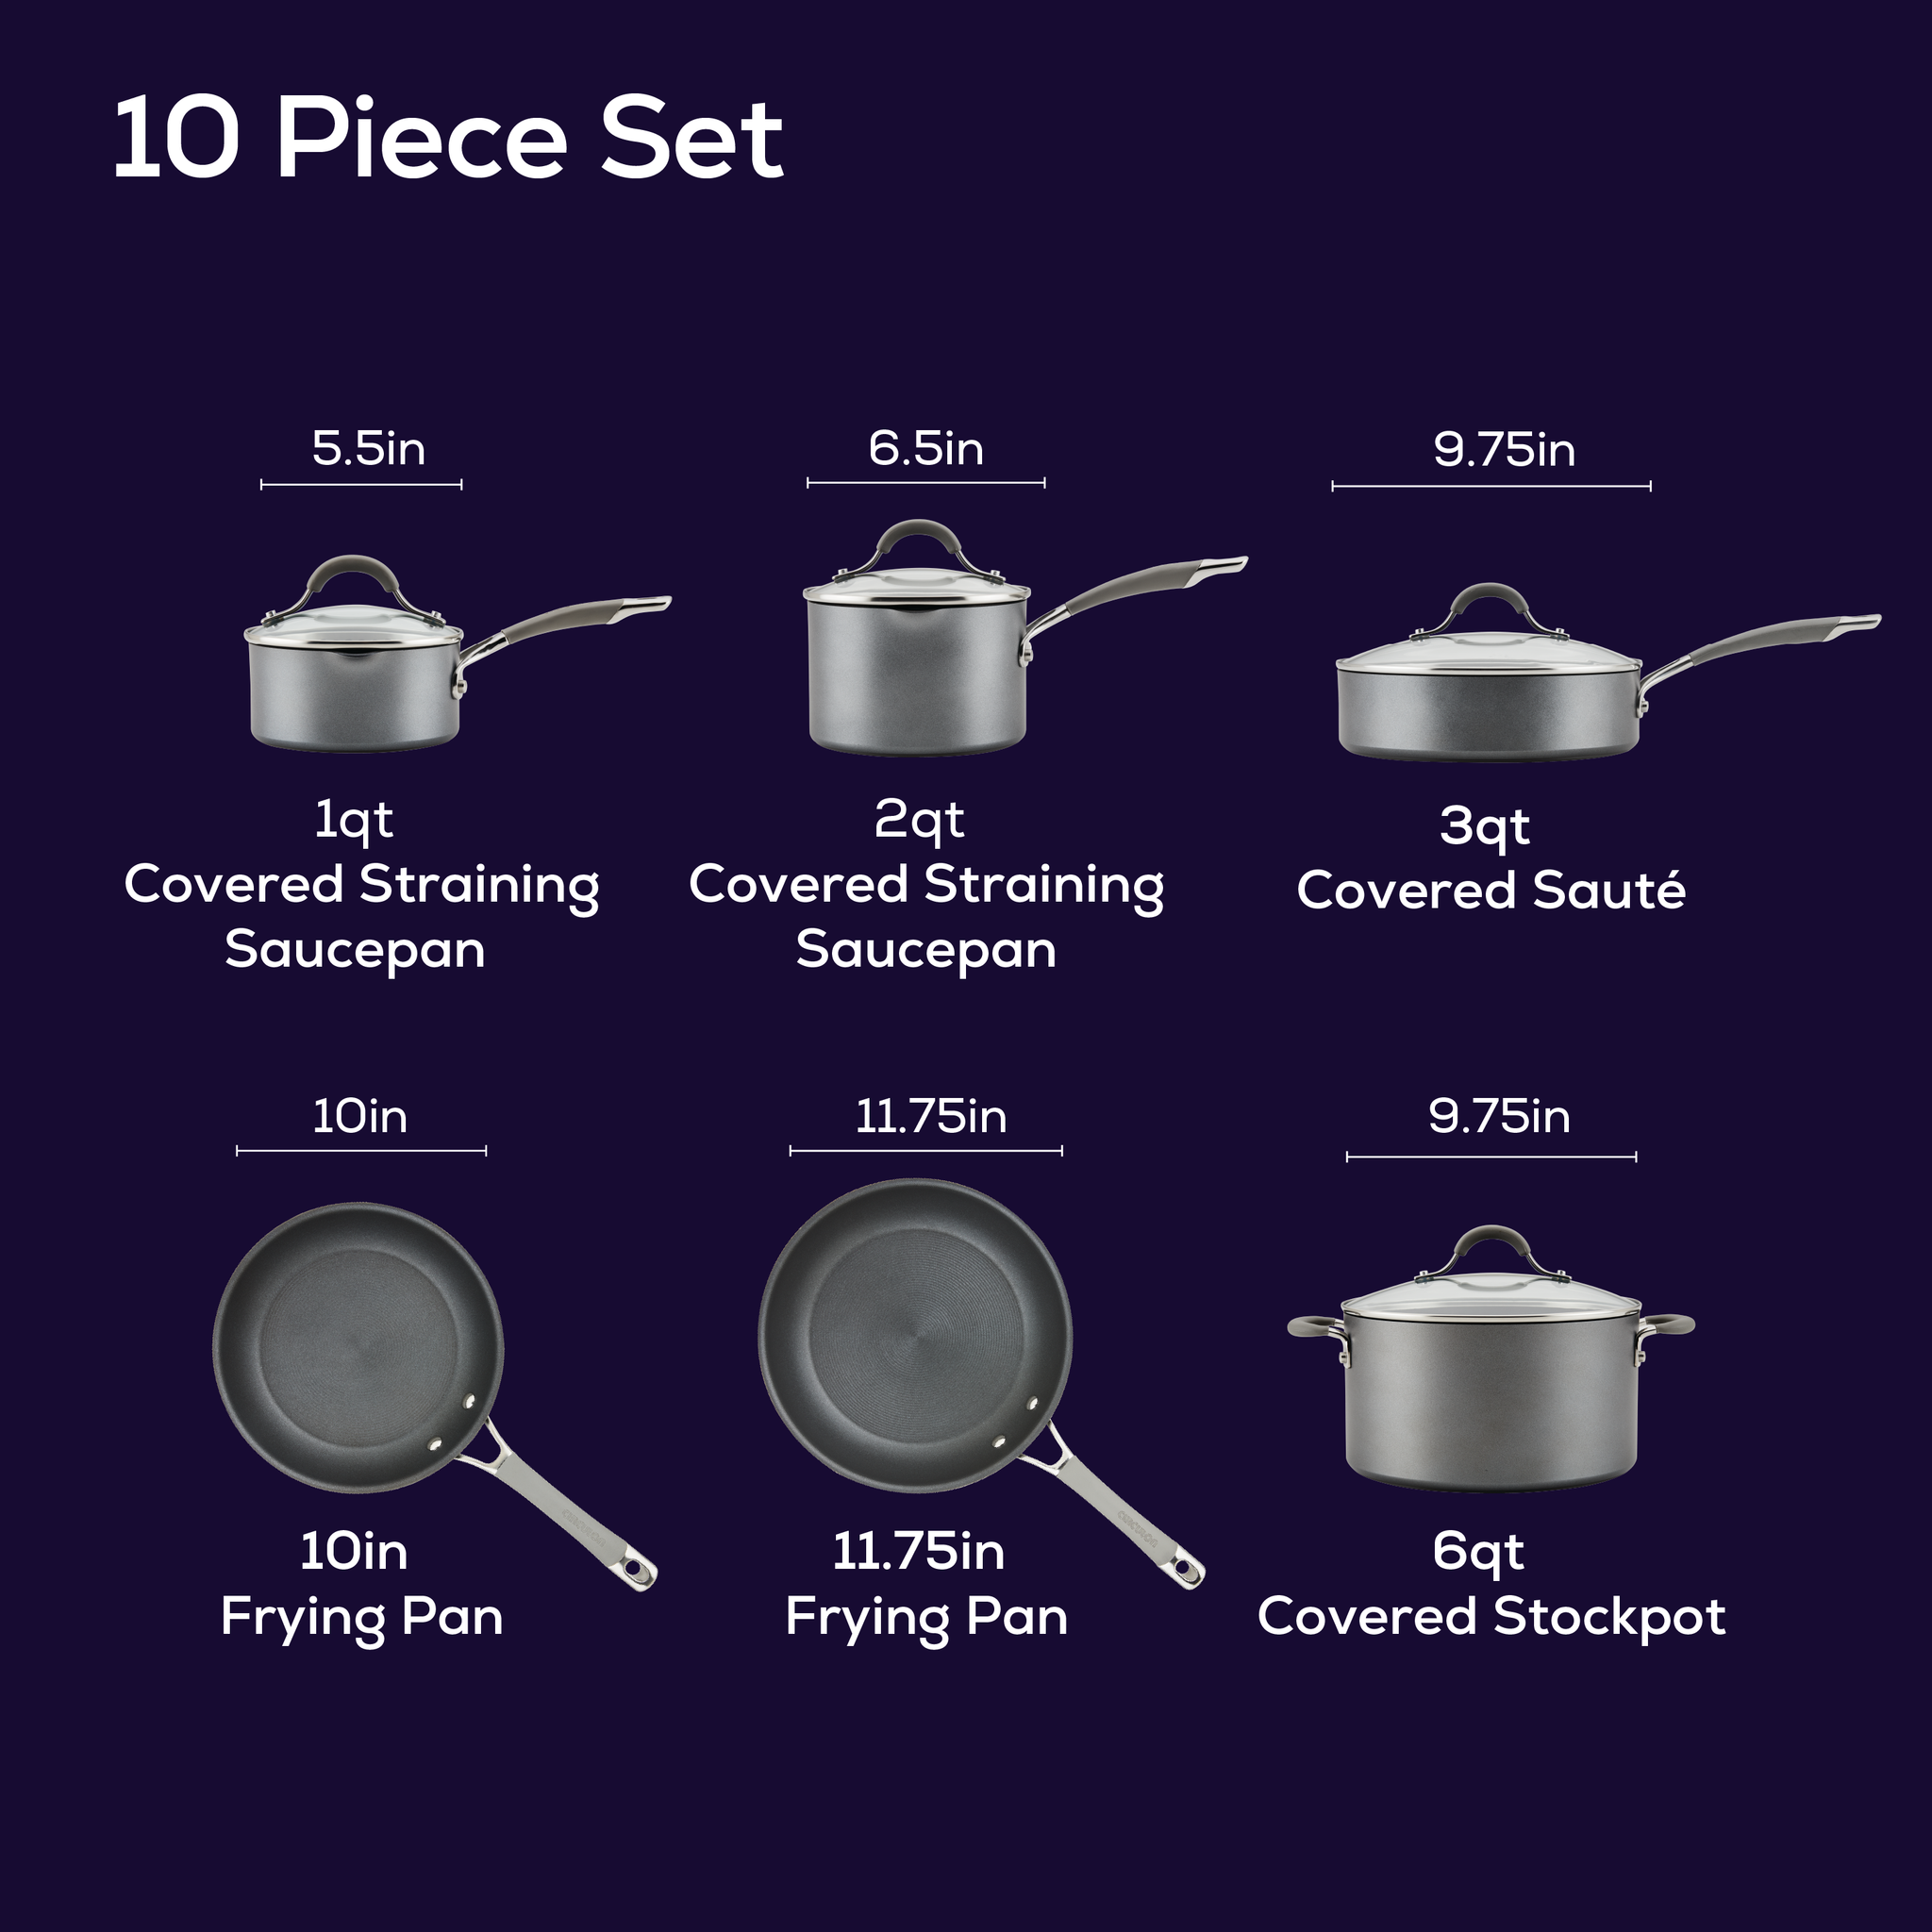 Circulon Cookware 10-Piece Nonstick Cookware Set with Bonus